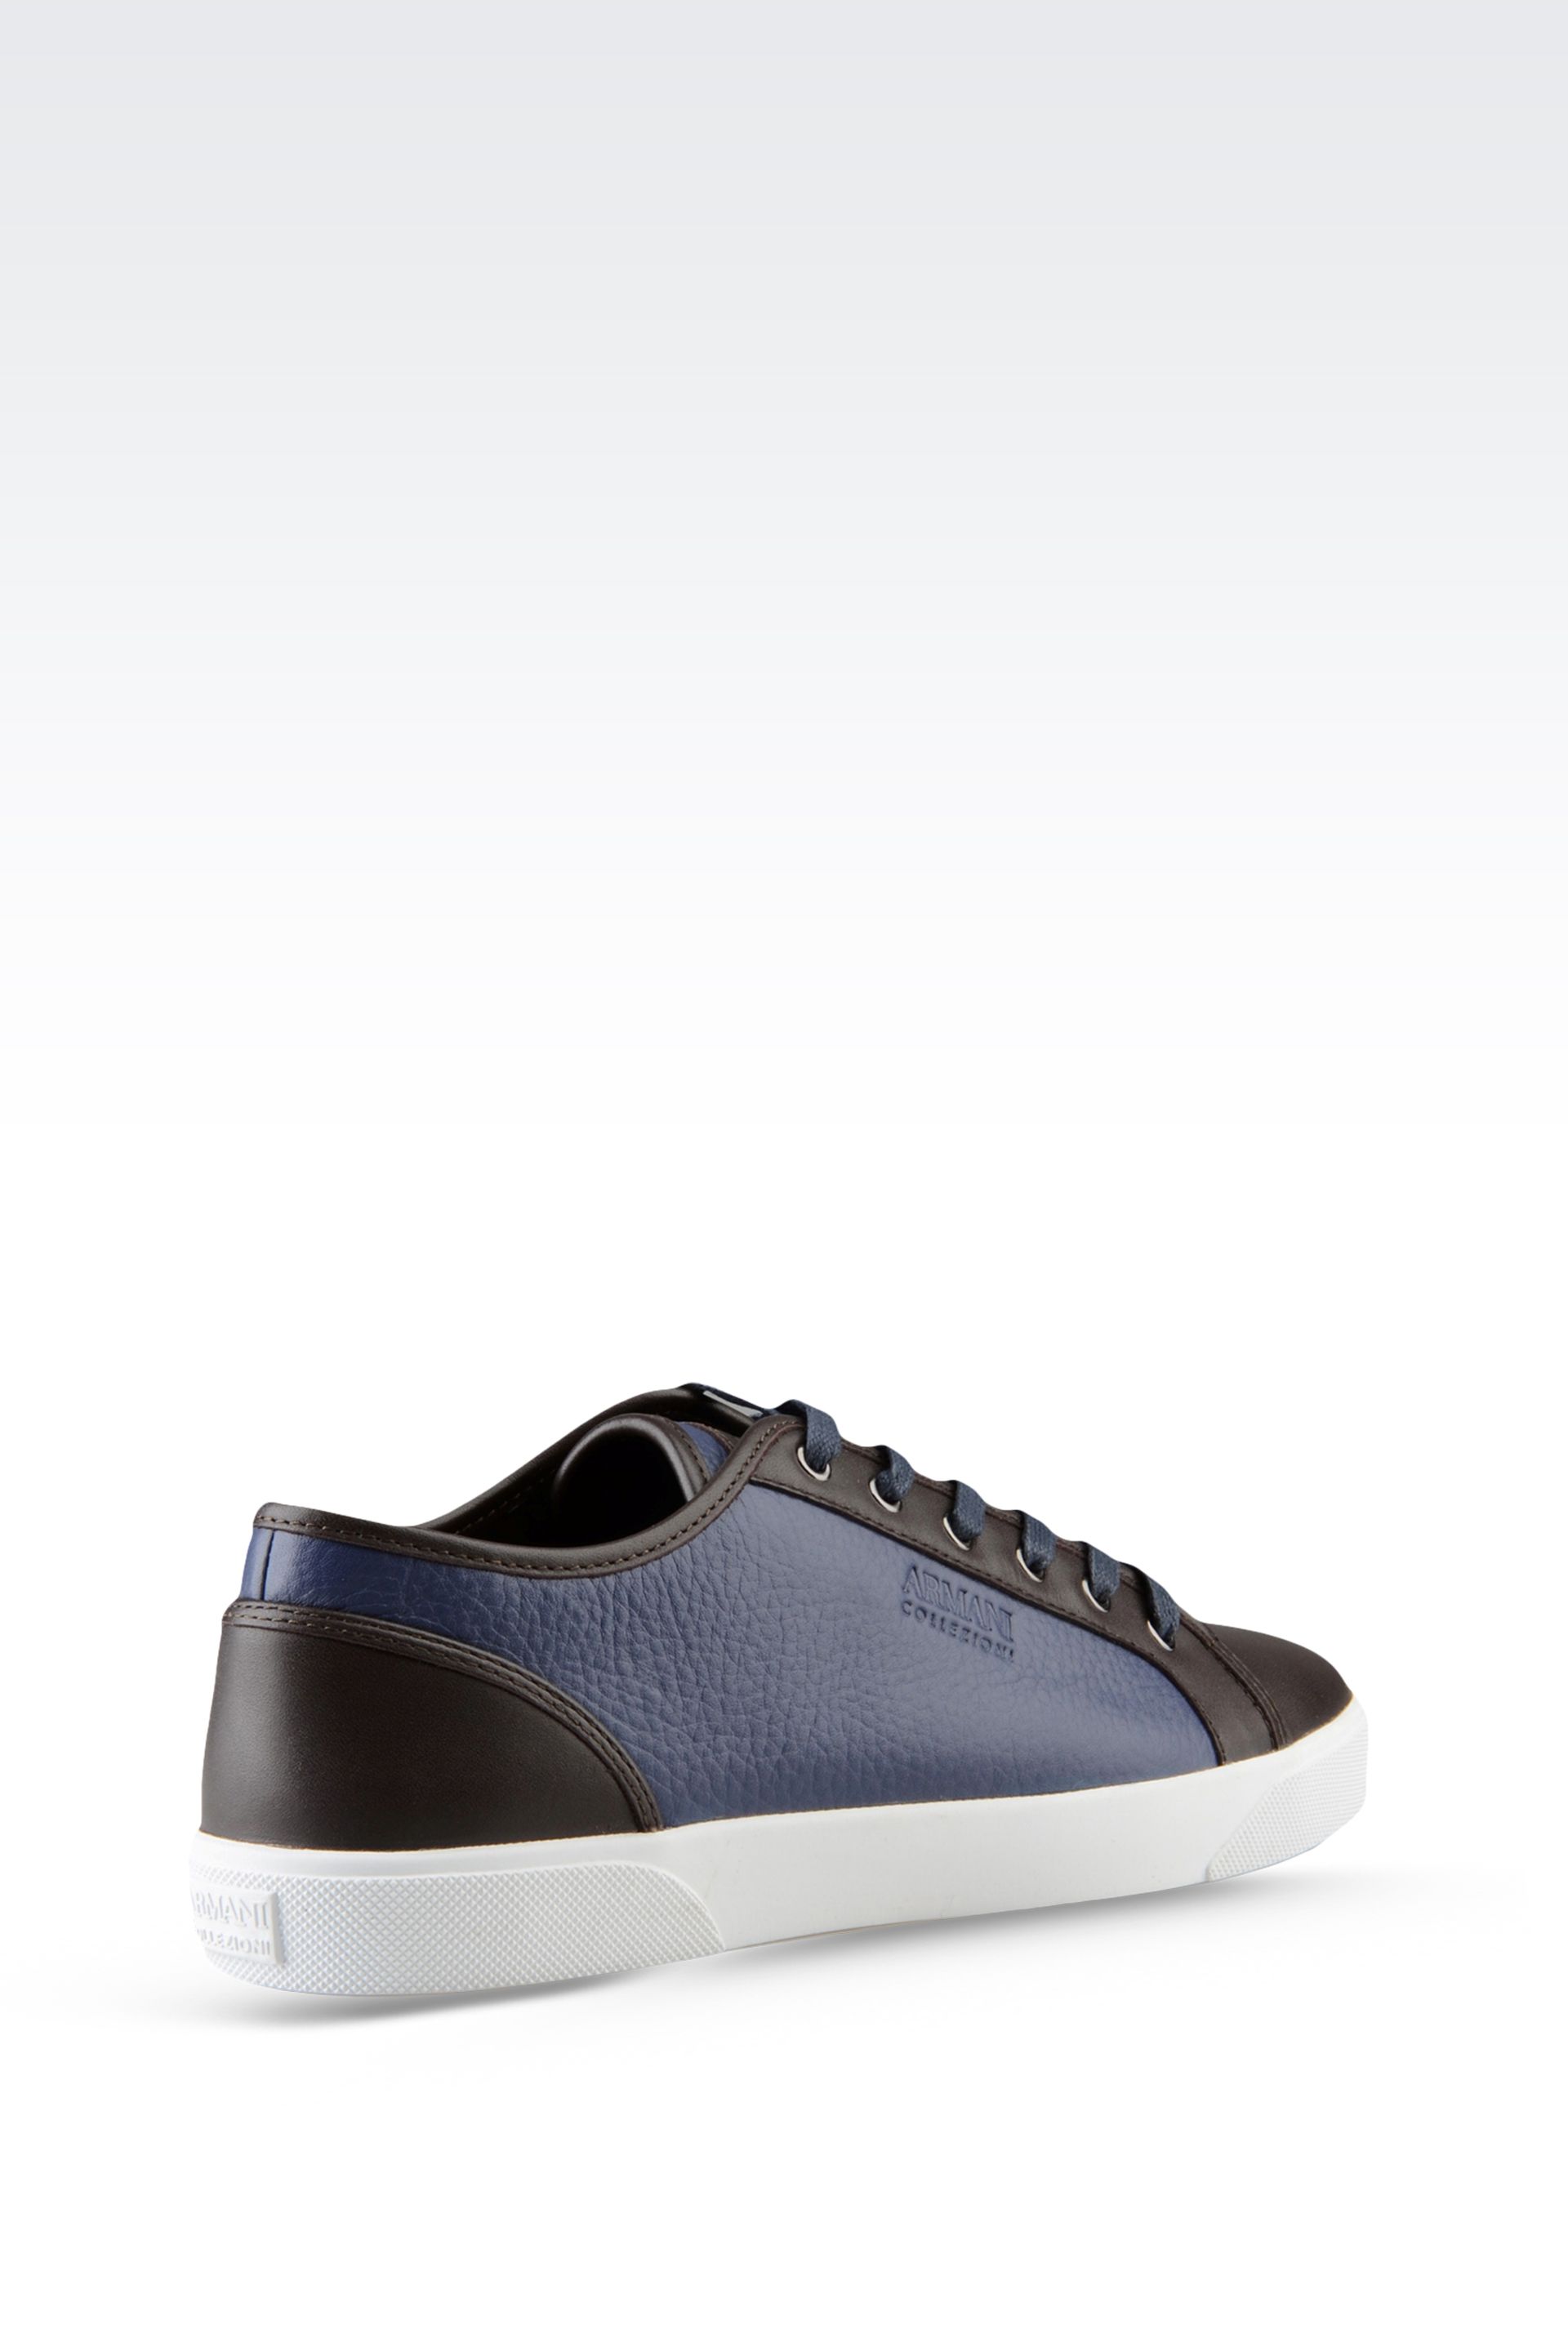 Armani Sneaker in Dark Brown (Blue) for Men - Lyst